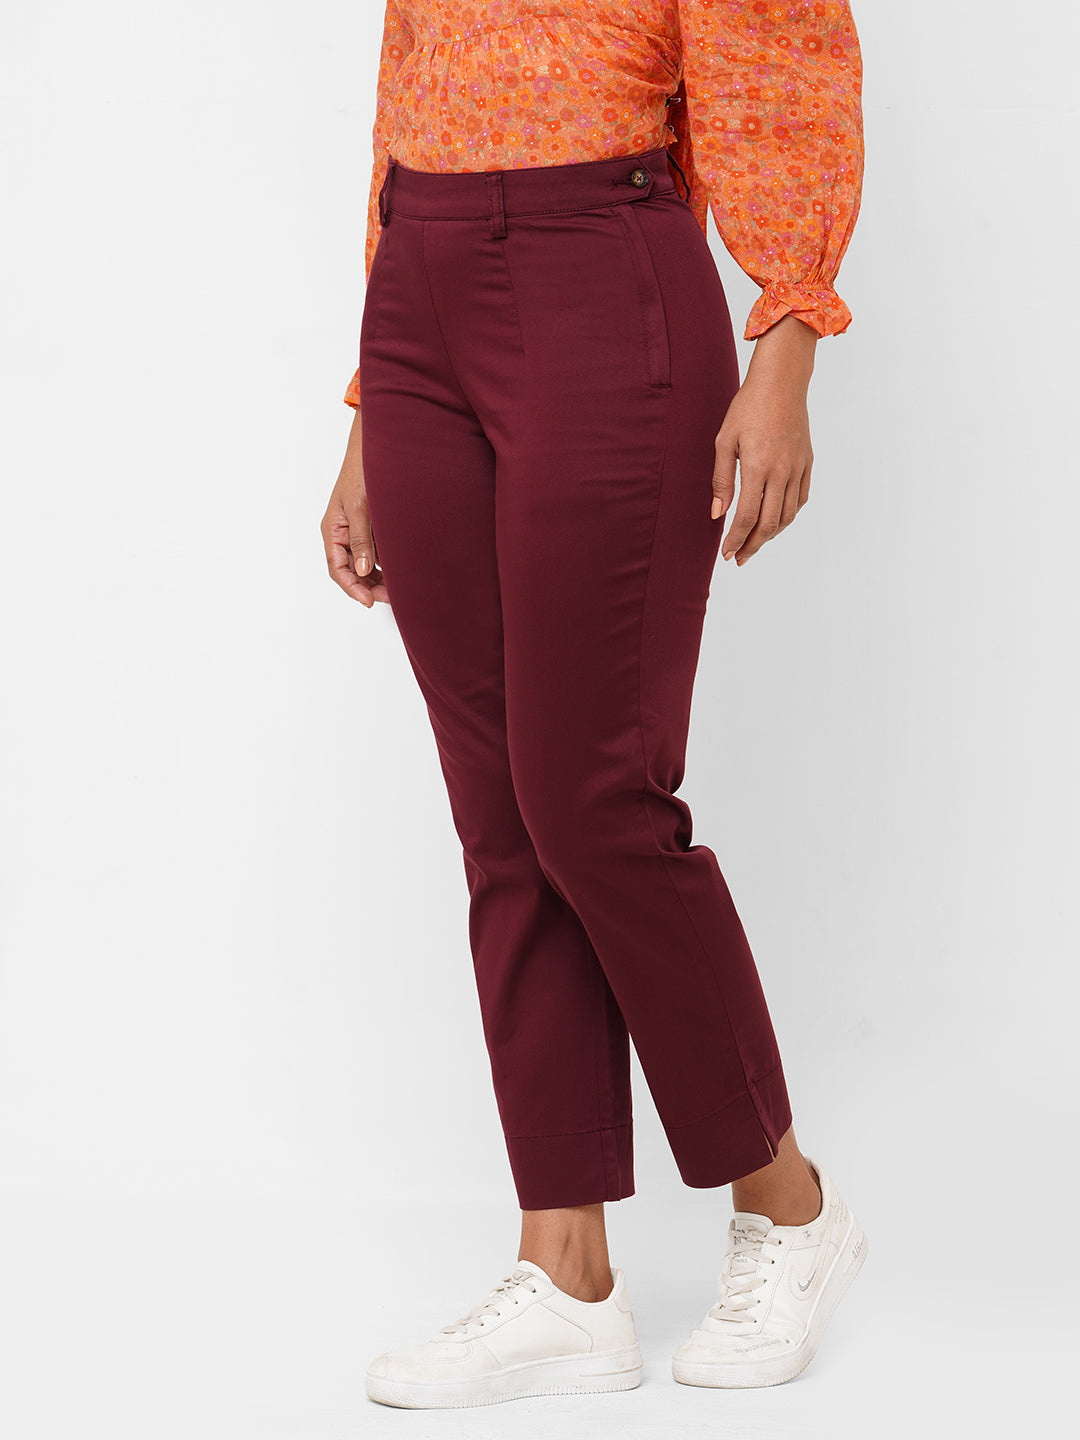 Women's Maroon/Red Cotton Lycra Regular Fit Pant